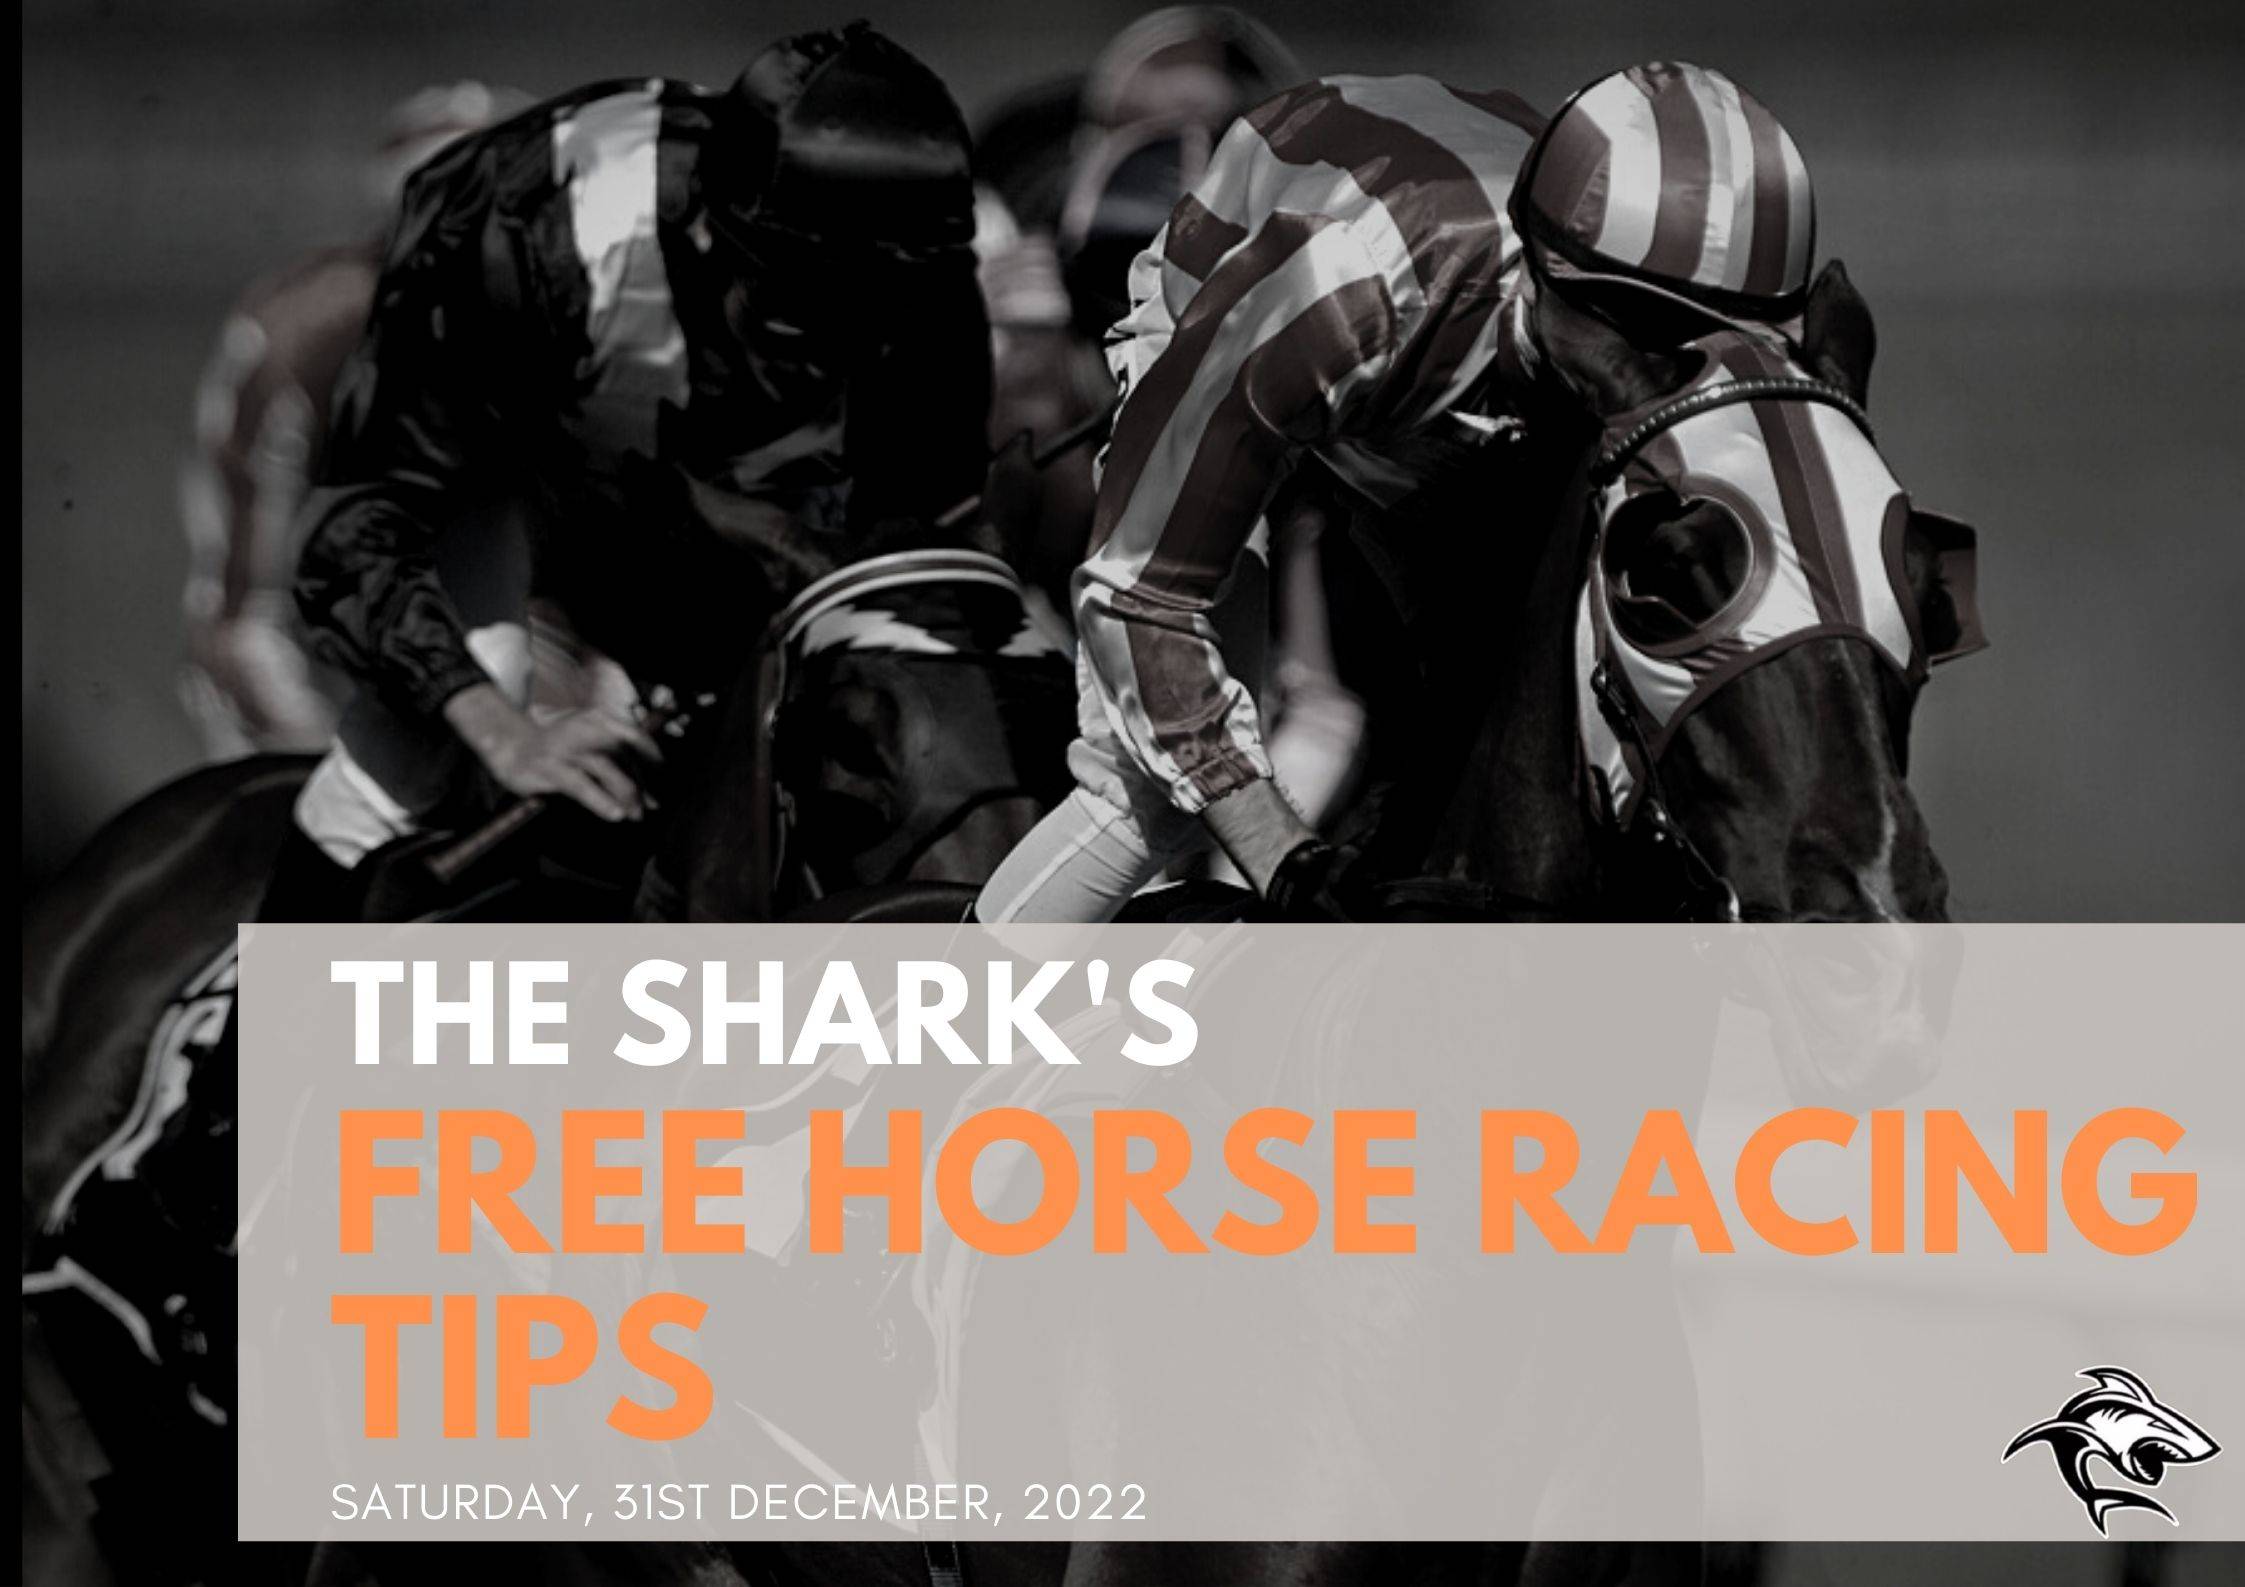 Free Horse Racing Tips - 31st Dec